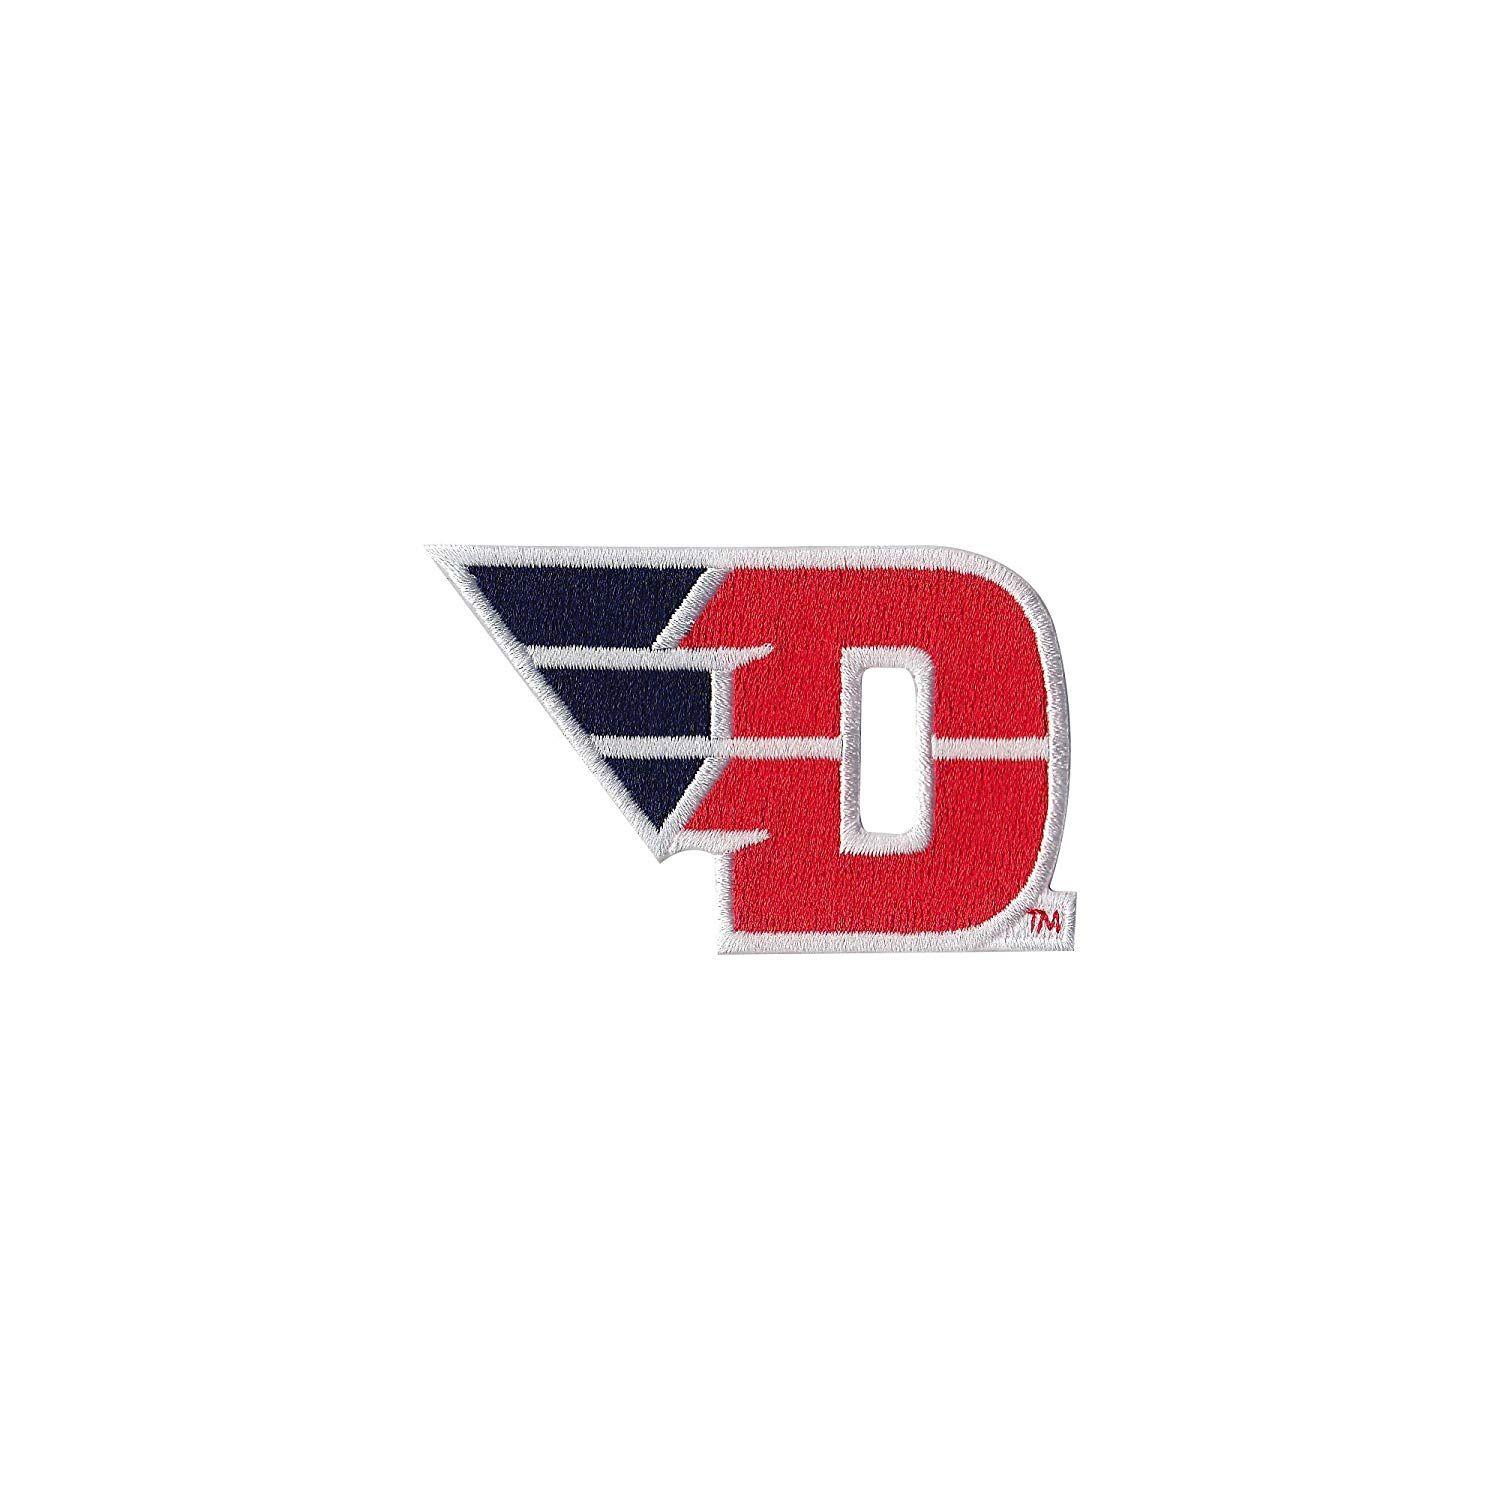 Dayton Logo - Tervis 1173362 Dayton Flyers Logo Tumbler with Emblem and Red Lid 16oz,  Clear